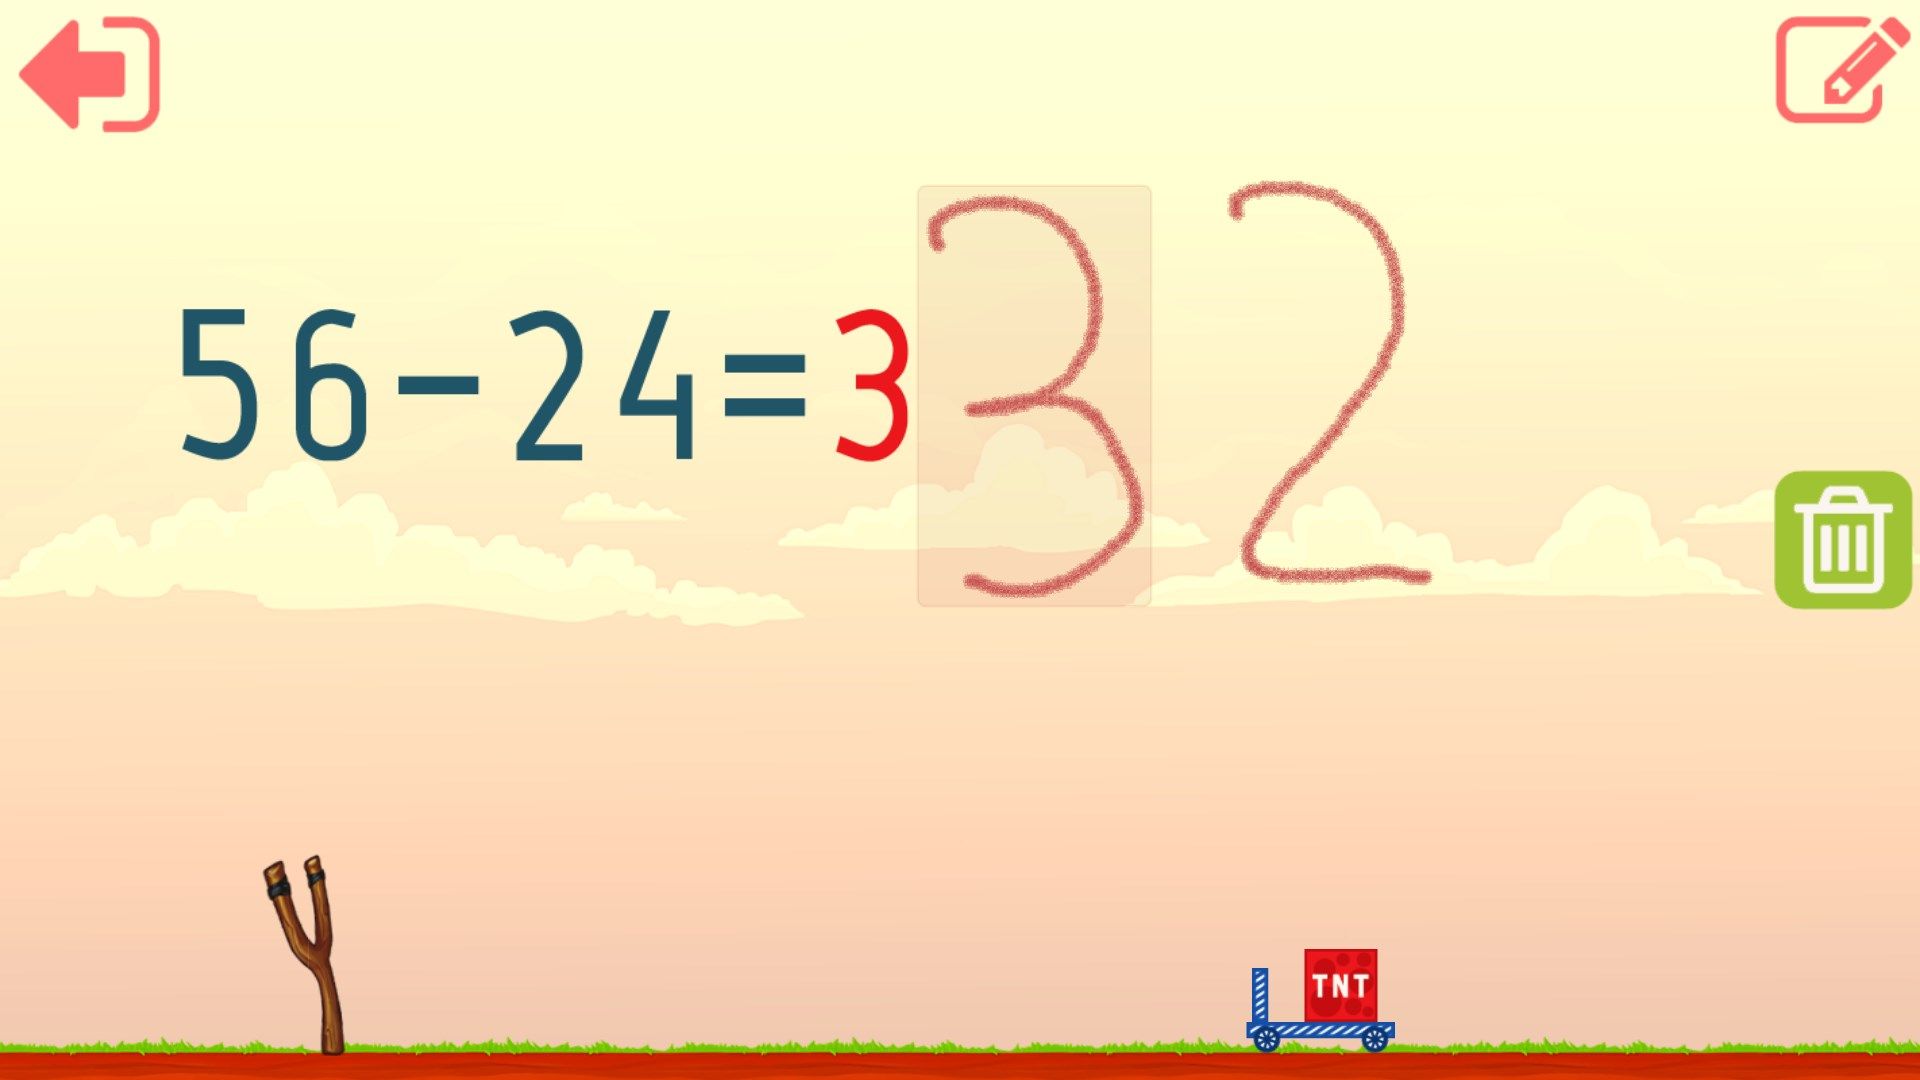 Third grade Math - Subtraction